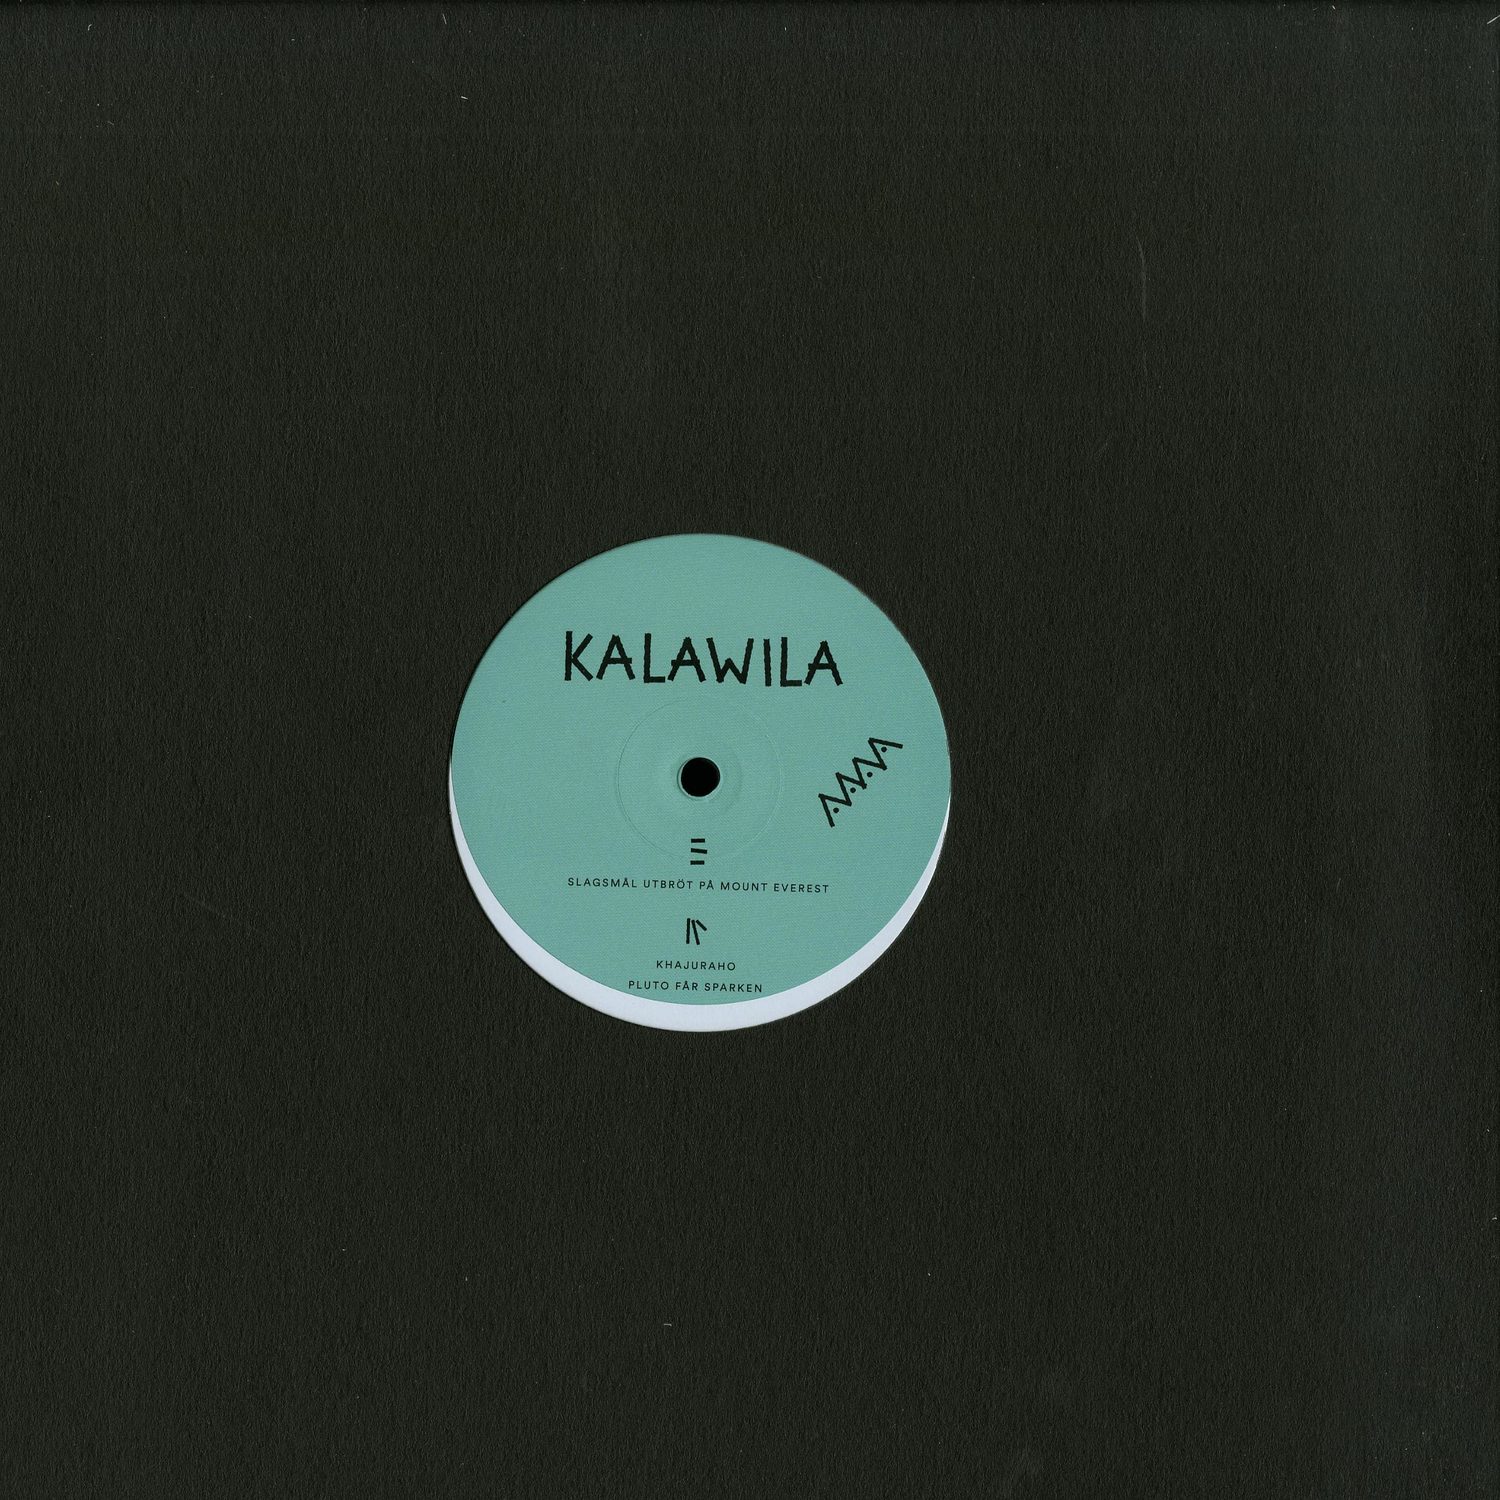 Kalawila - SLAGSMAL UTBROET PA MOUNT EVEREST EP 